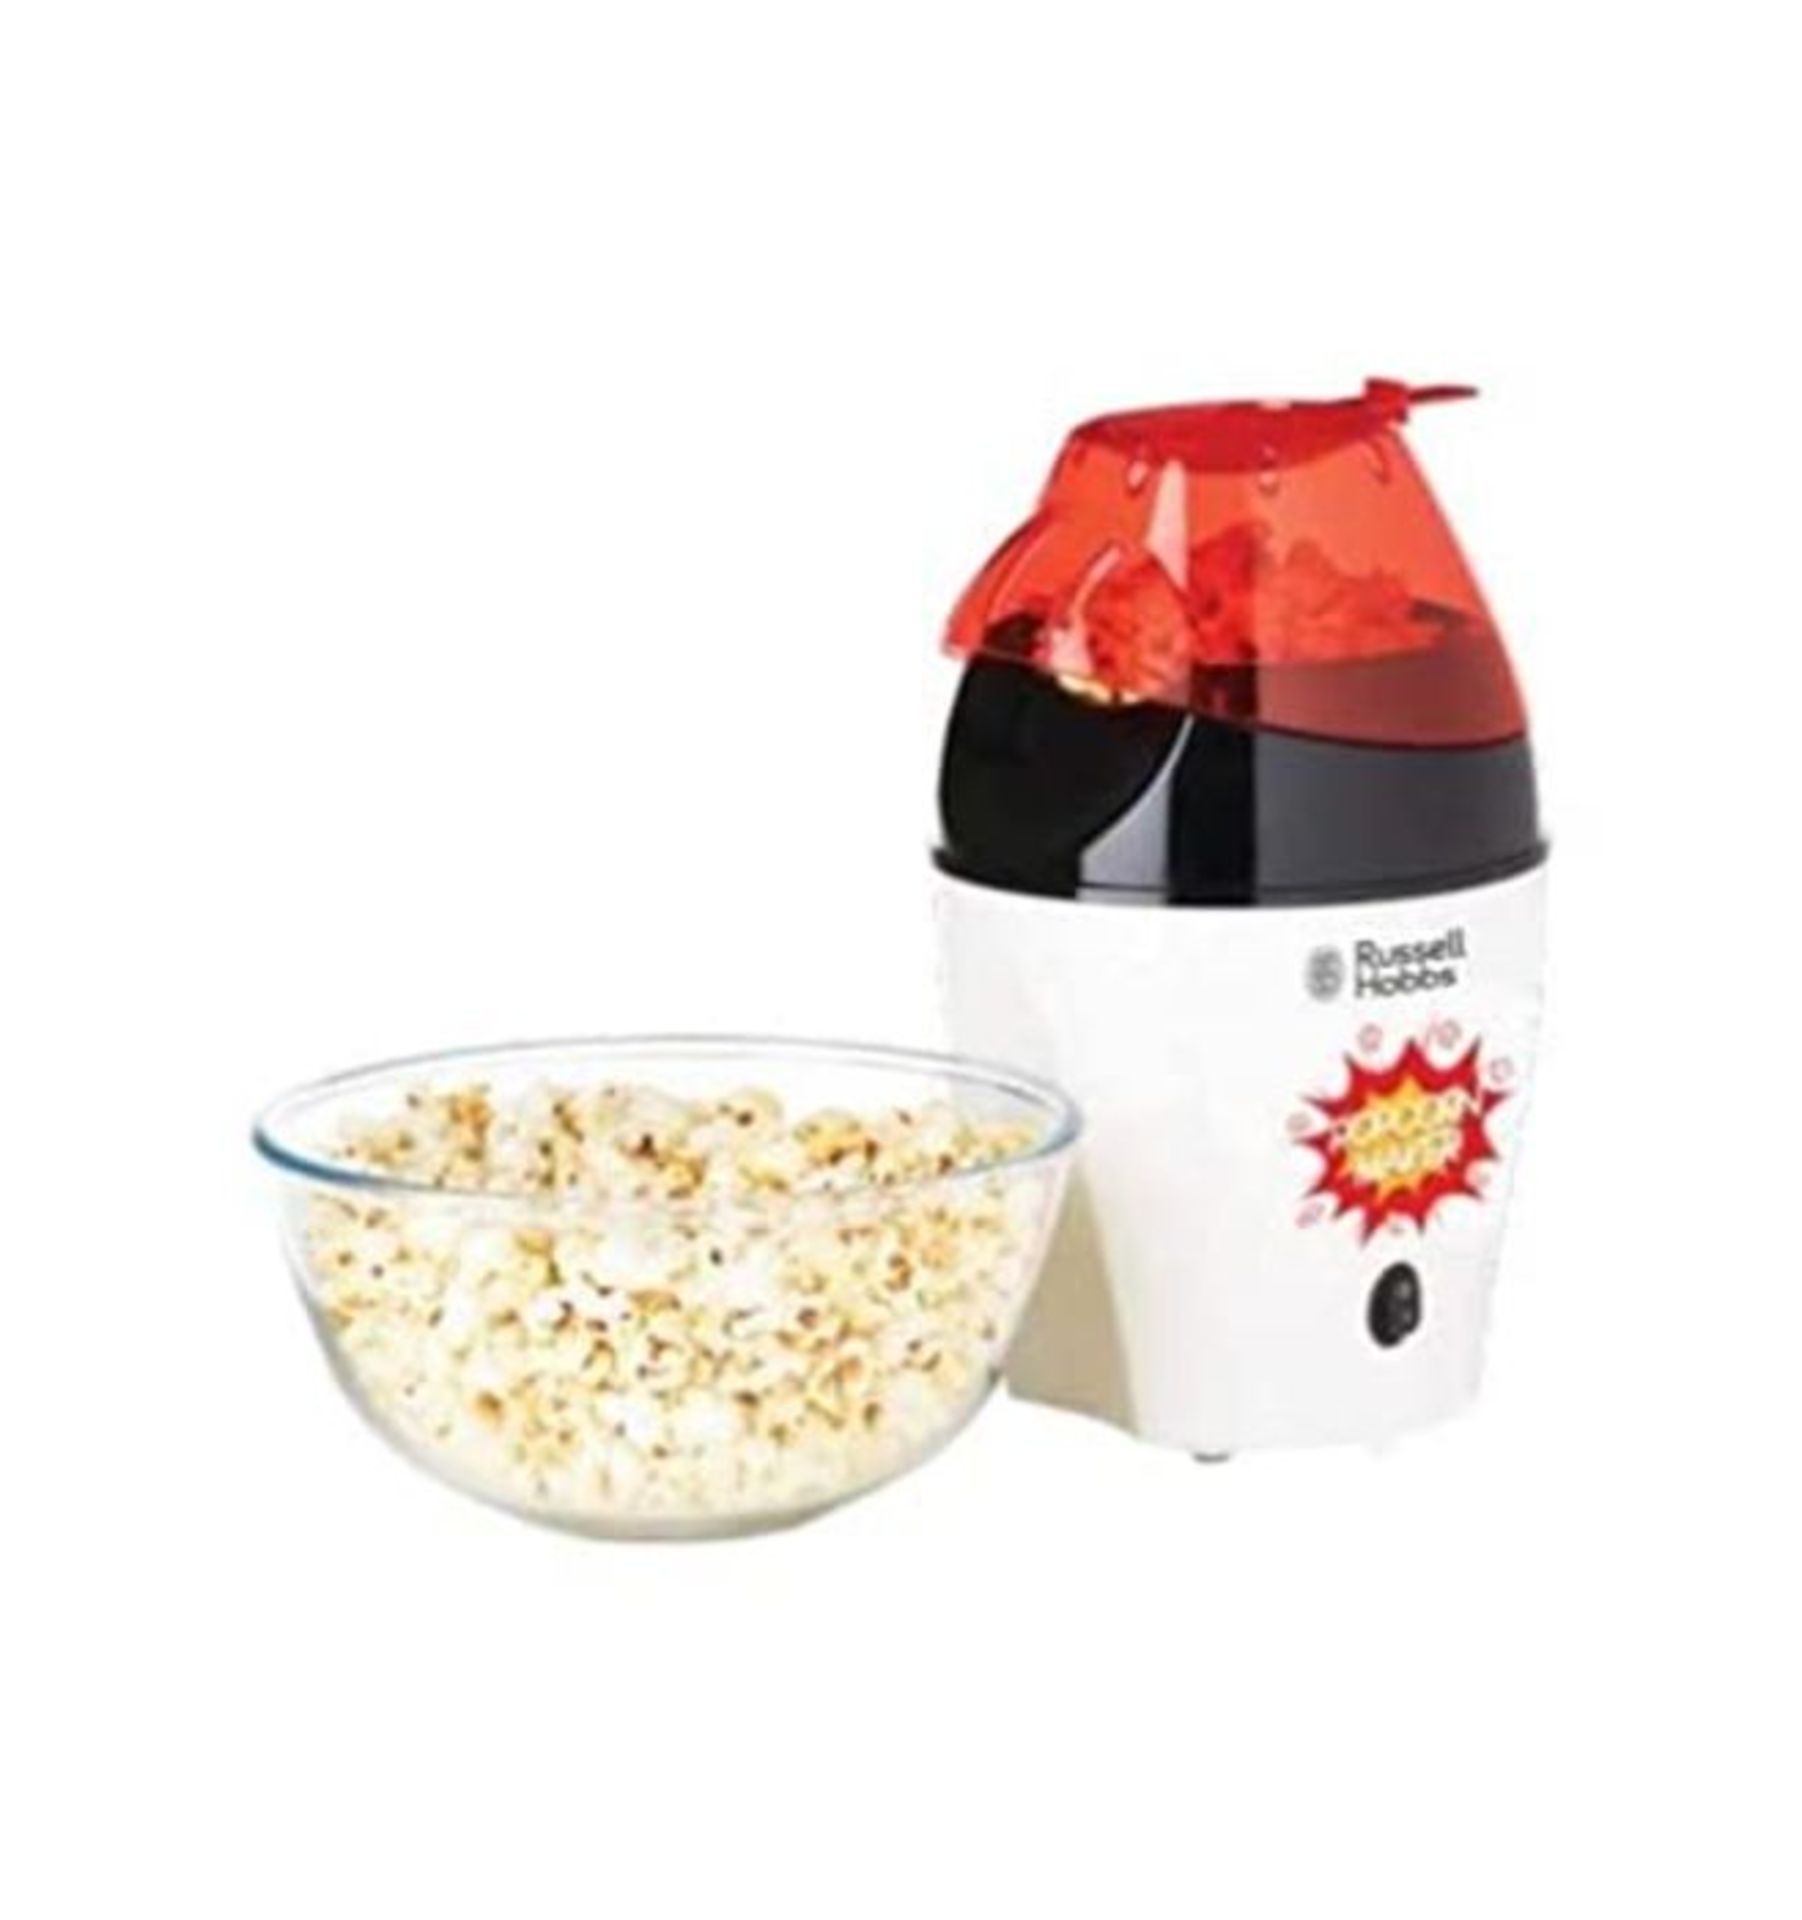 Russell Hobbs 24630-56 Popcorn Maker Fiesta-24630-56, White